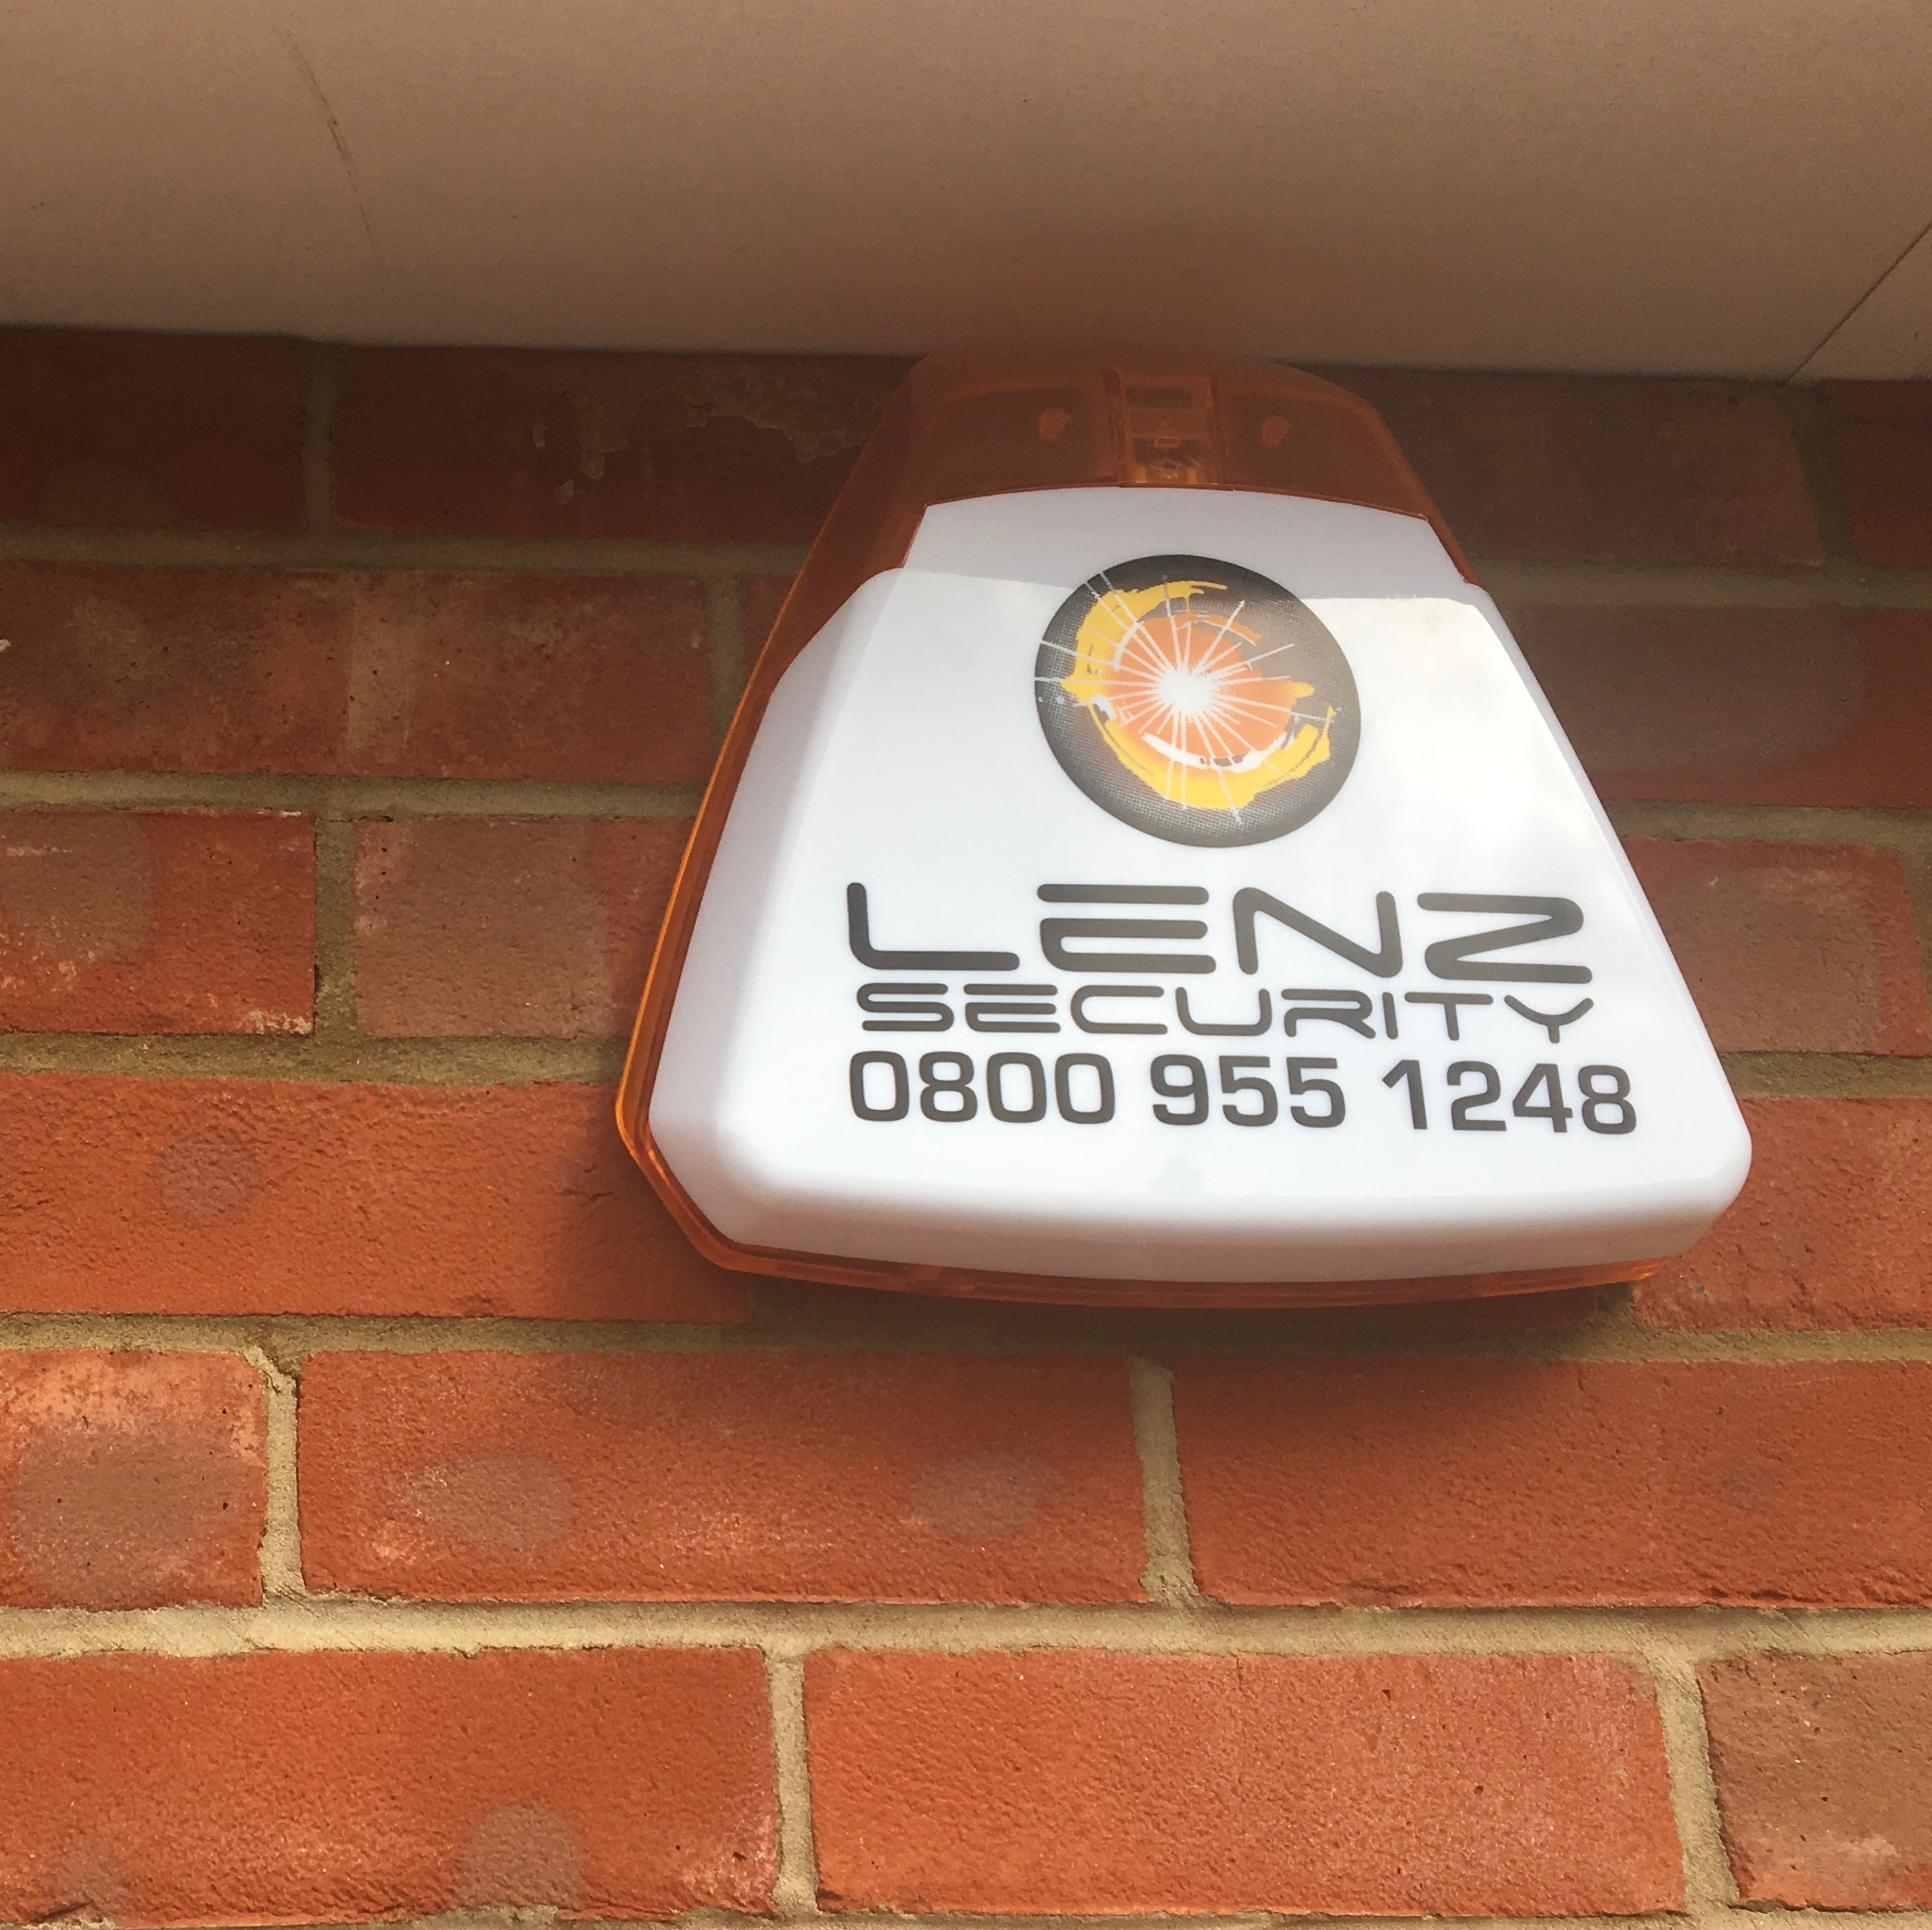 Business security Colchester alarm| Lenz Security